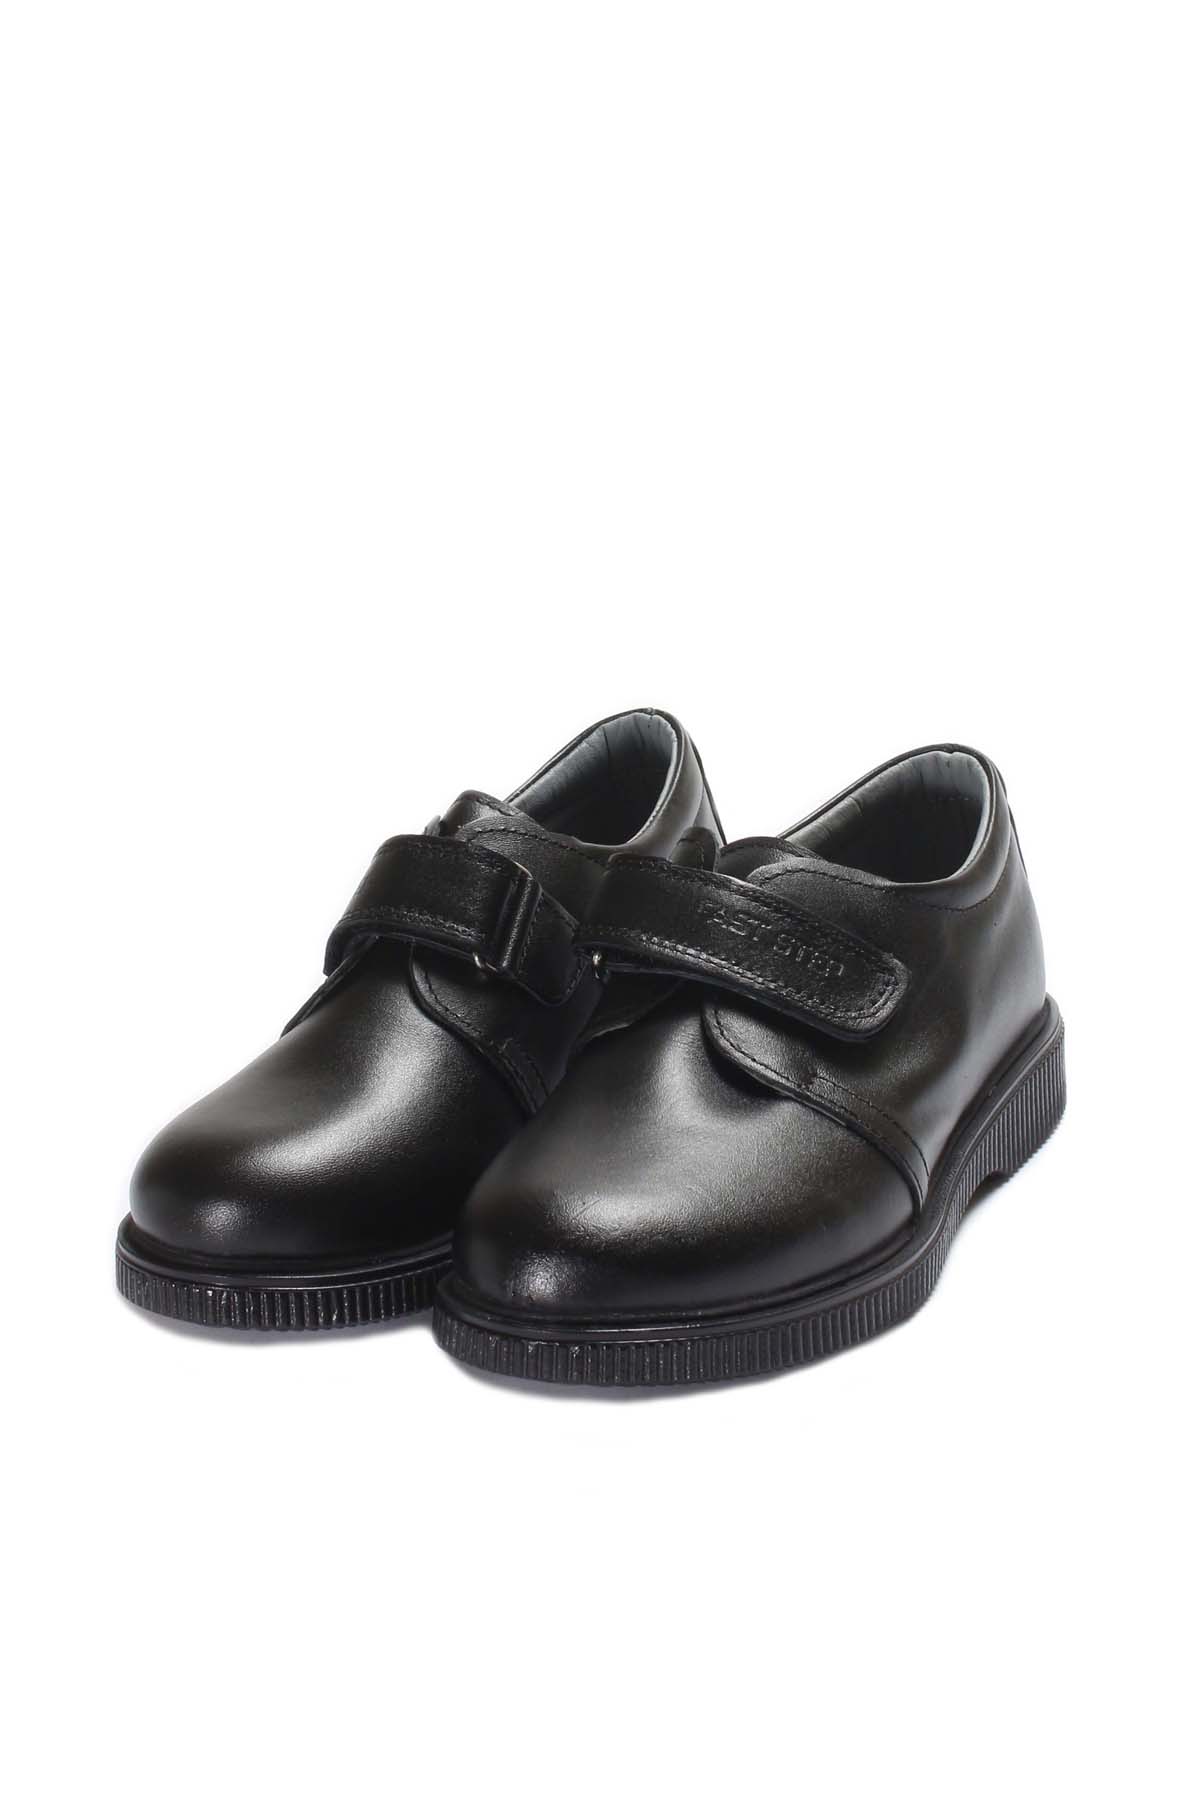 Fast Step Kids Unisex Genuine Leather Boys Daily Shoes Black 006XA913